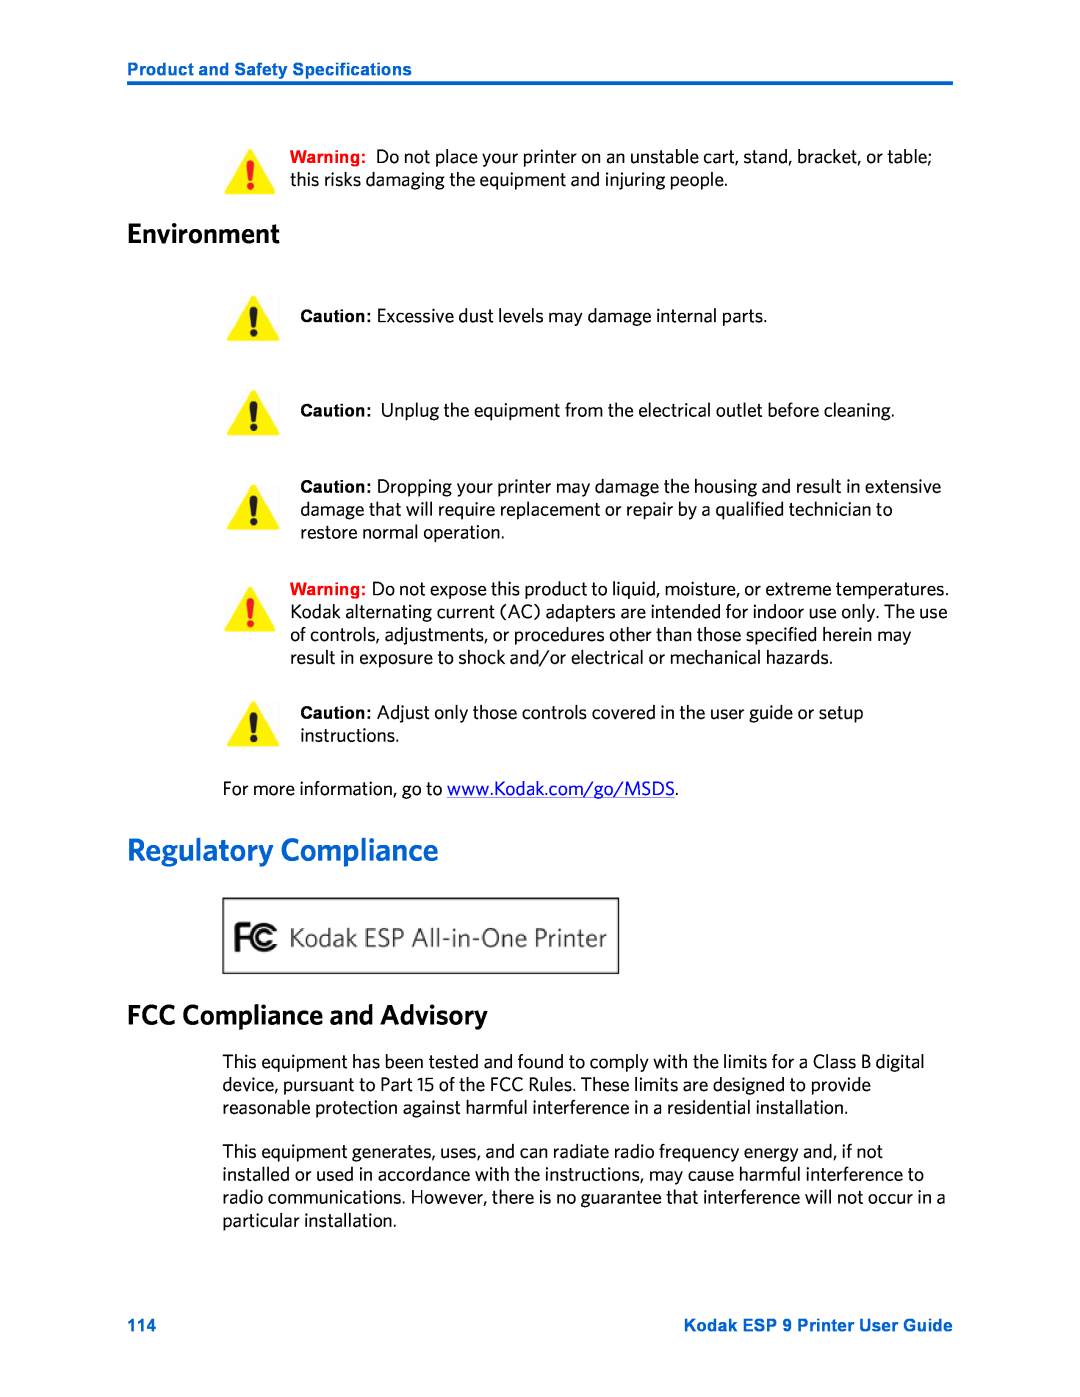 Kodak ESP 9 manual Regulatory Compliance, Environment, FCC Compliance and Advisory 